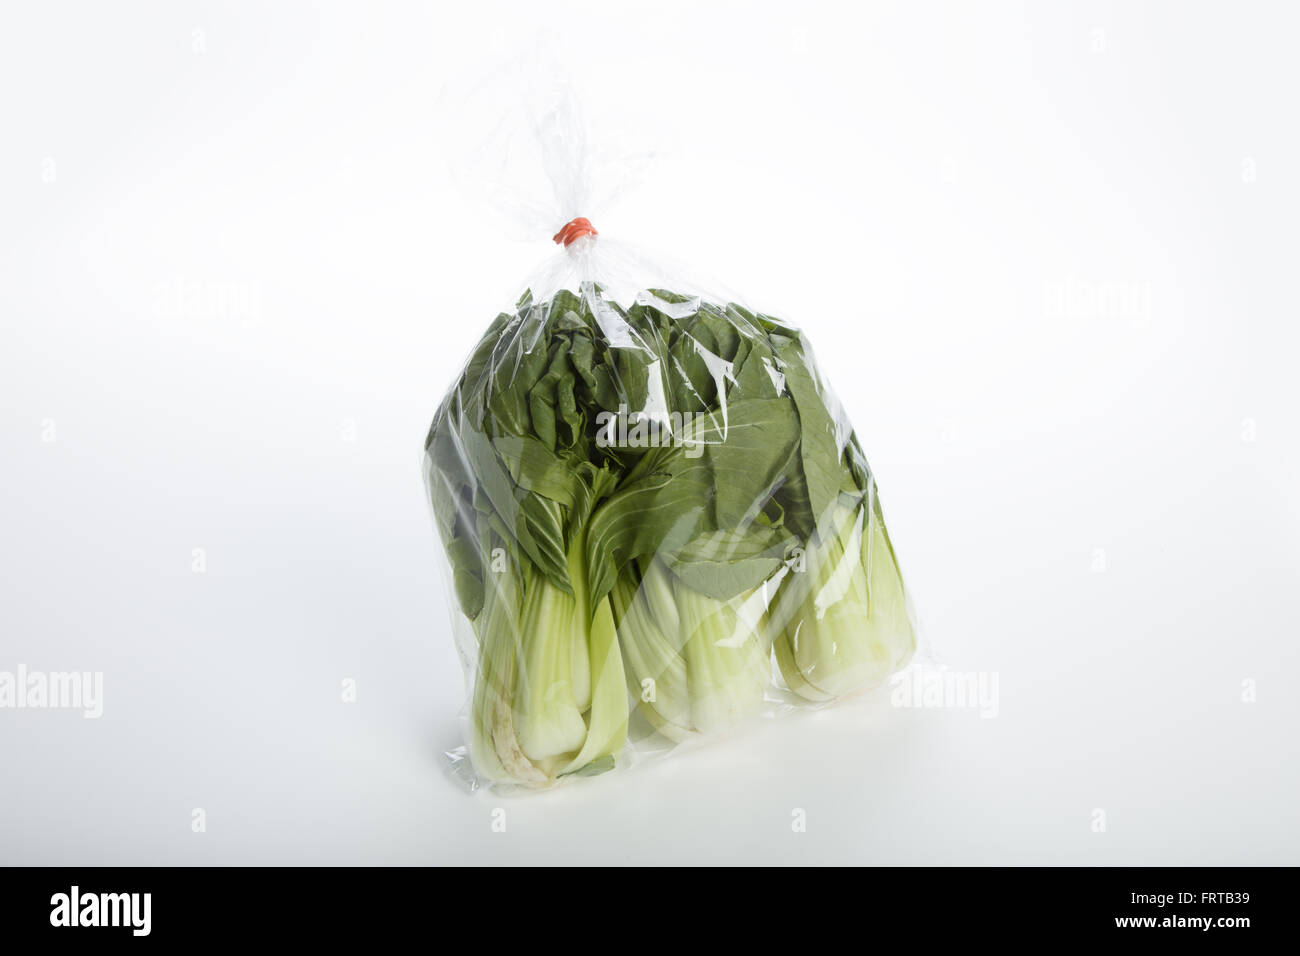 Green Bok choy vegetable on white background Stock Photo